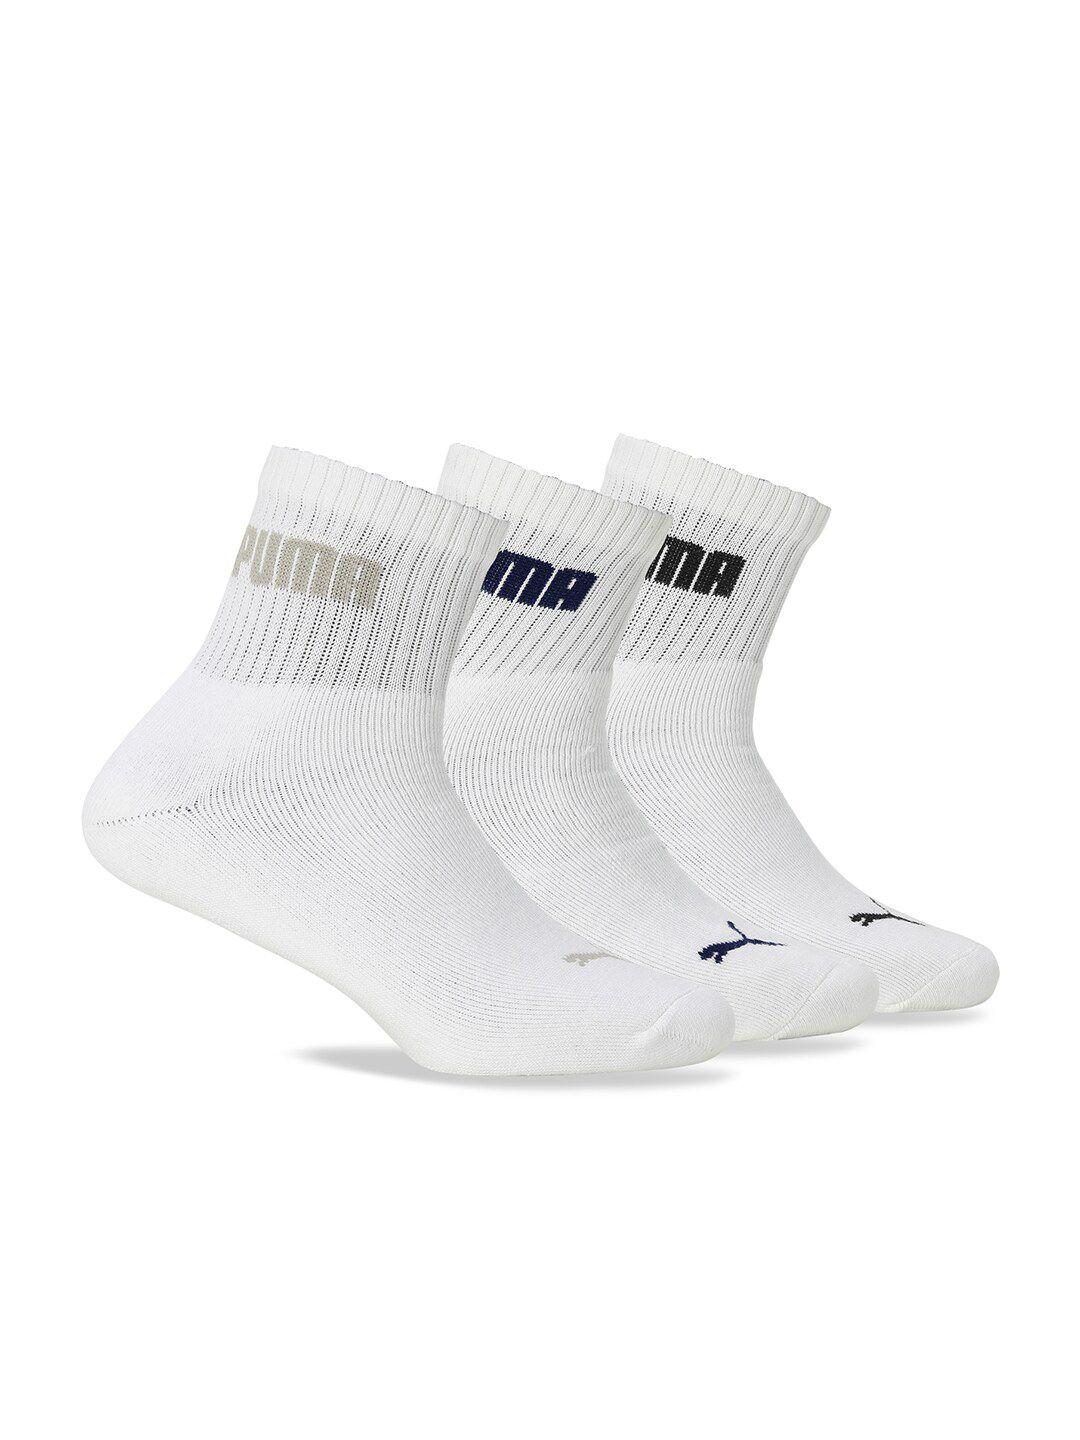 puma sport quarter unisex pack of 3 cotton above-ankle length socks